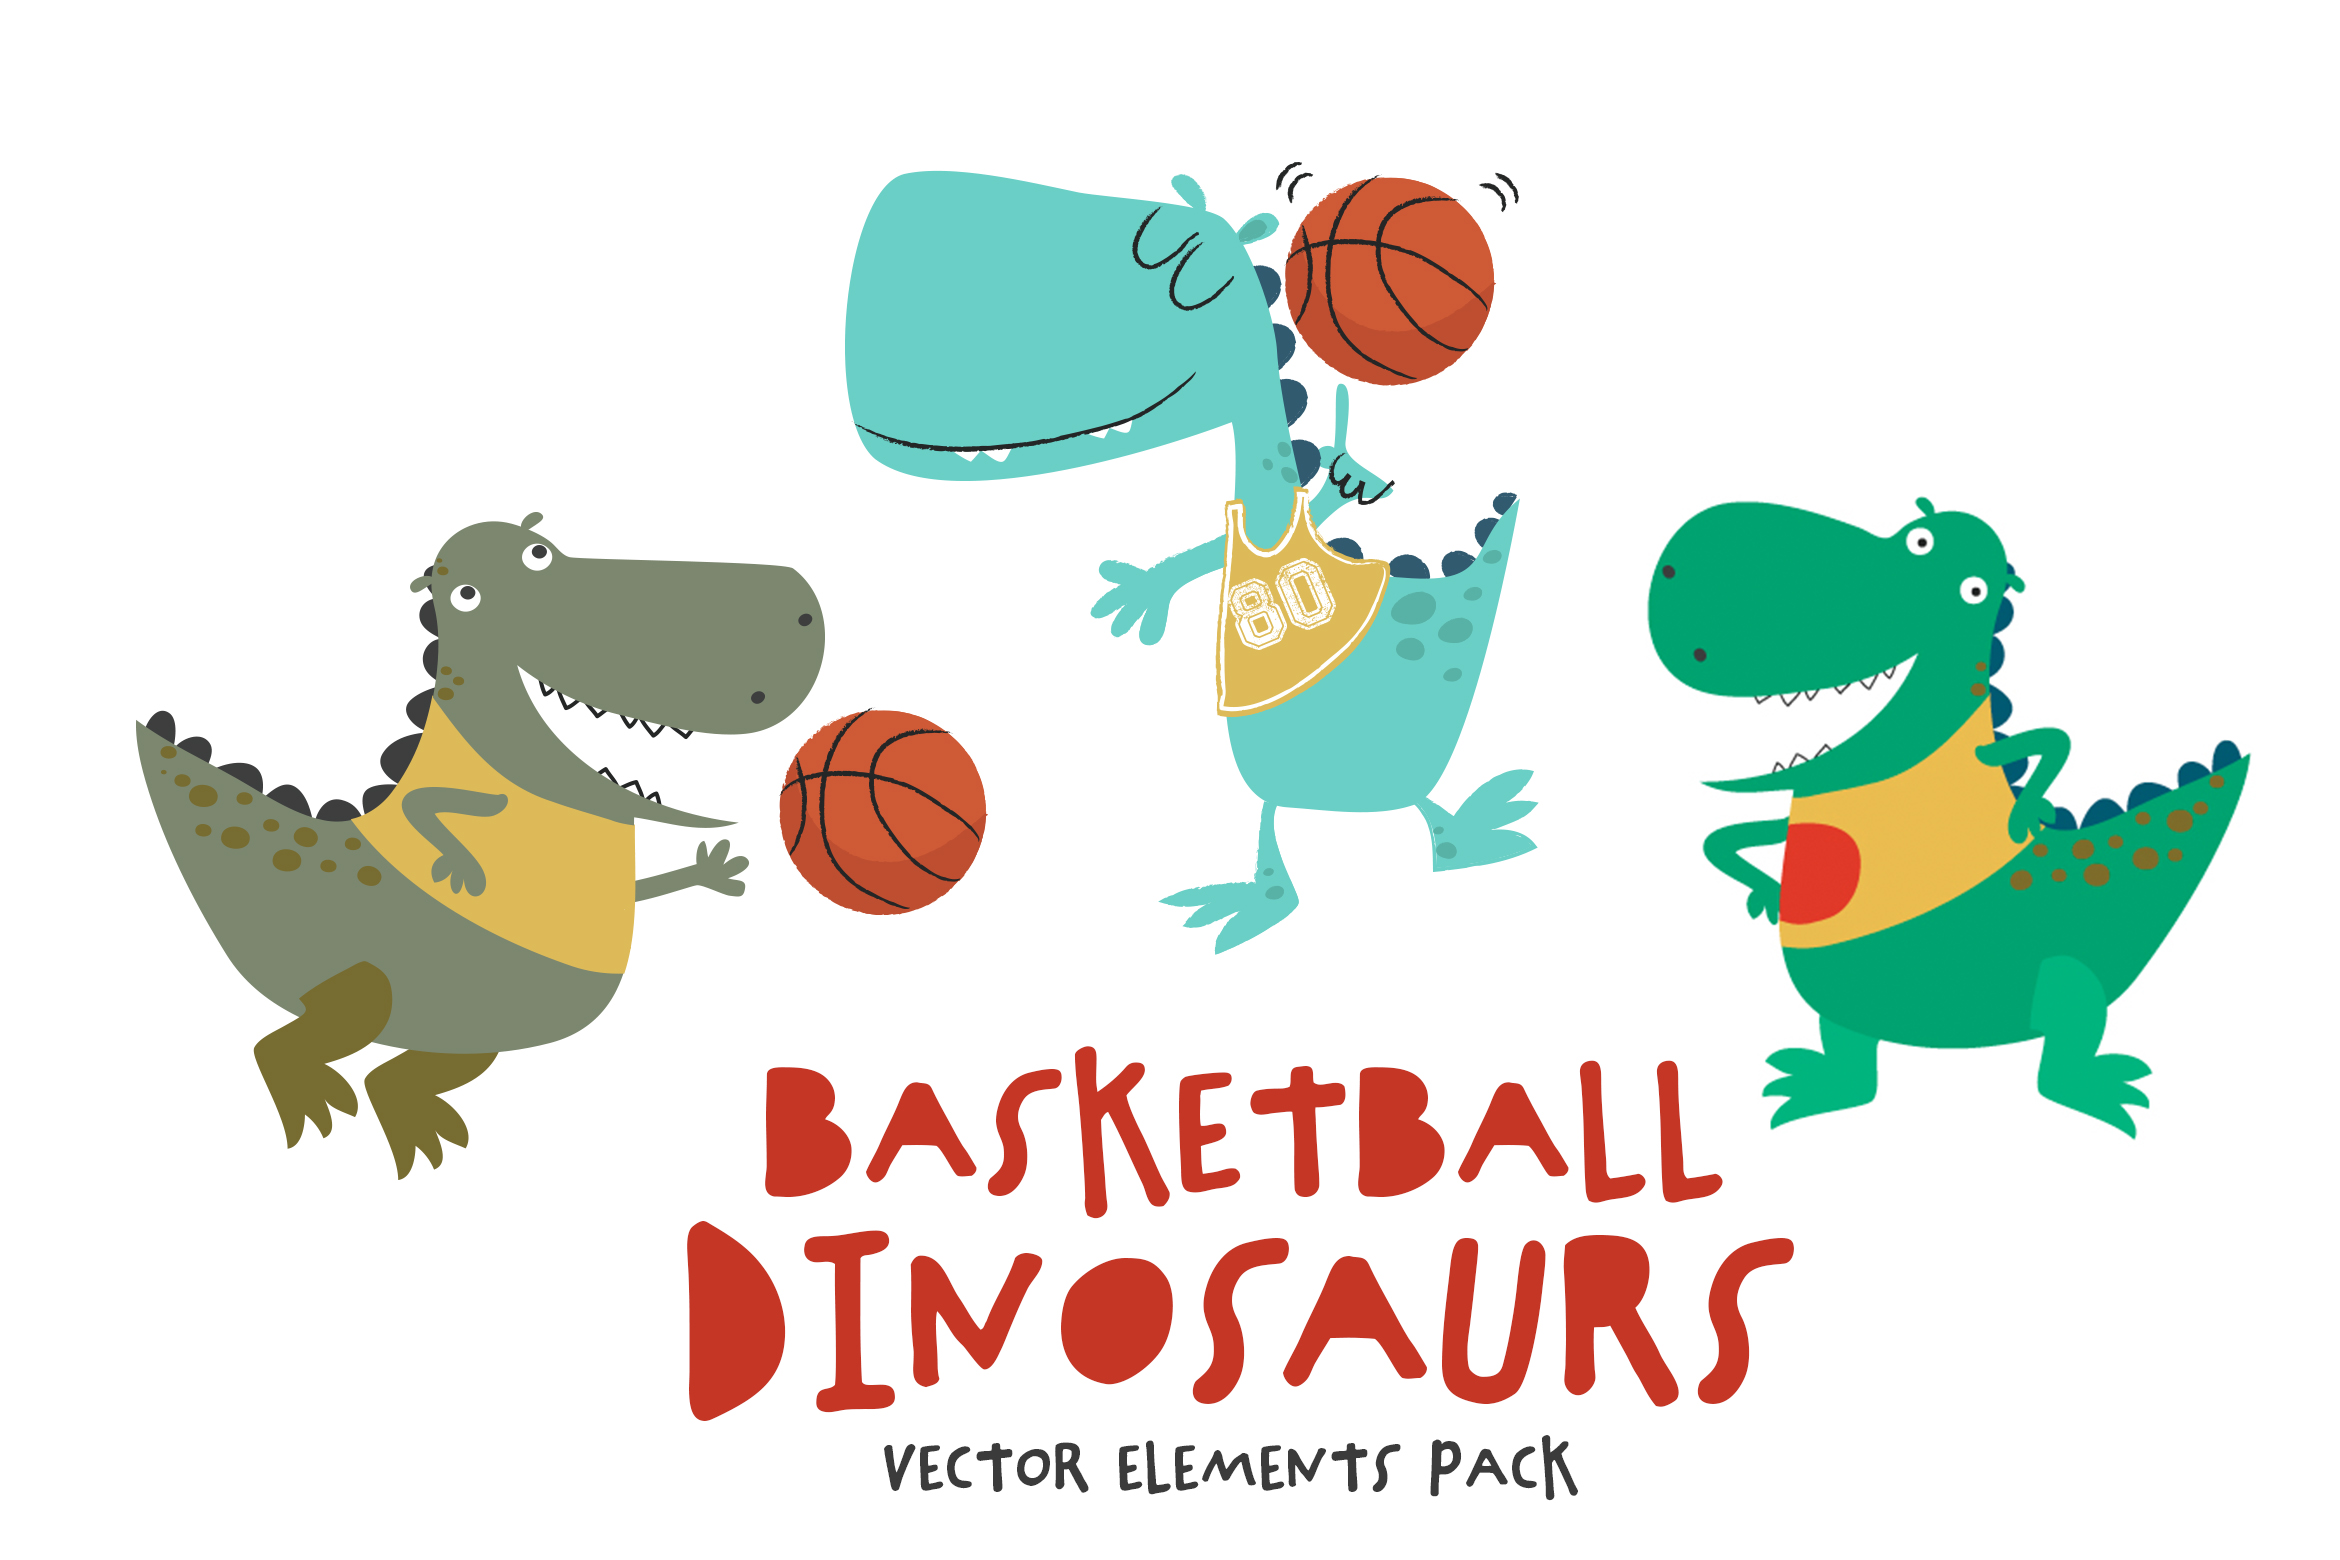 Basketball_Dinosaurs_1_2340.jpg